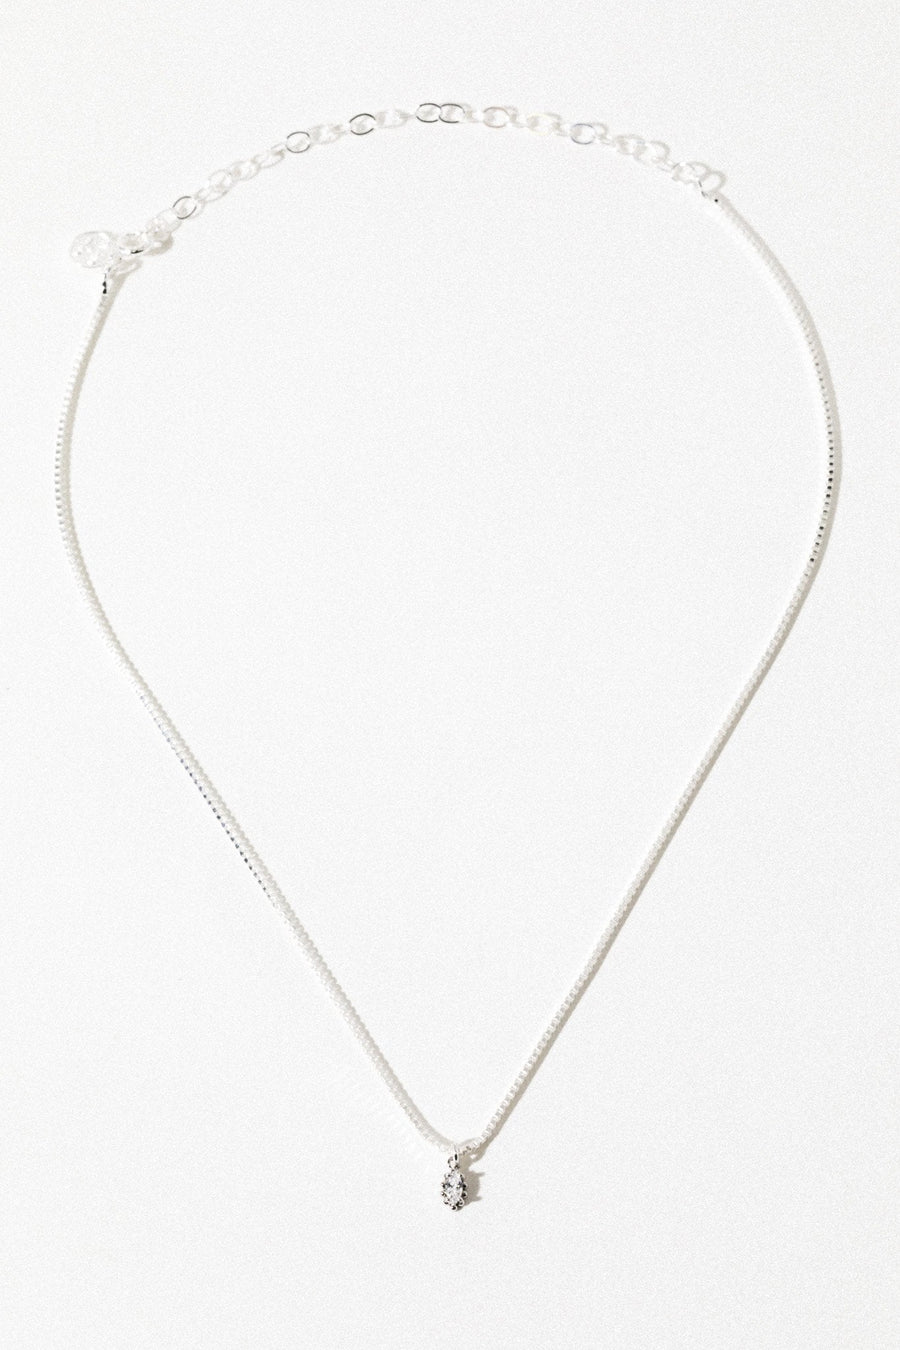 Dona Italia Jewelry Silver / 14 Inches Shu Deity Necklace